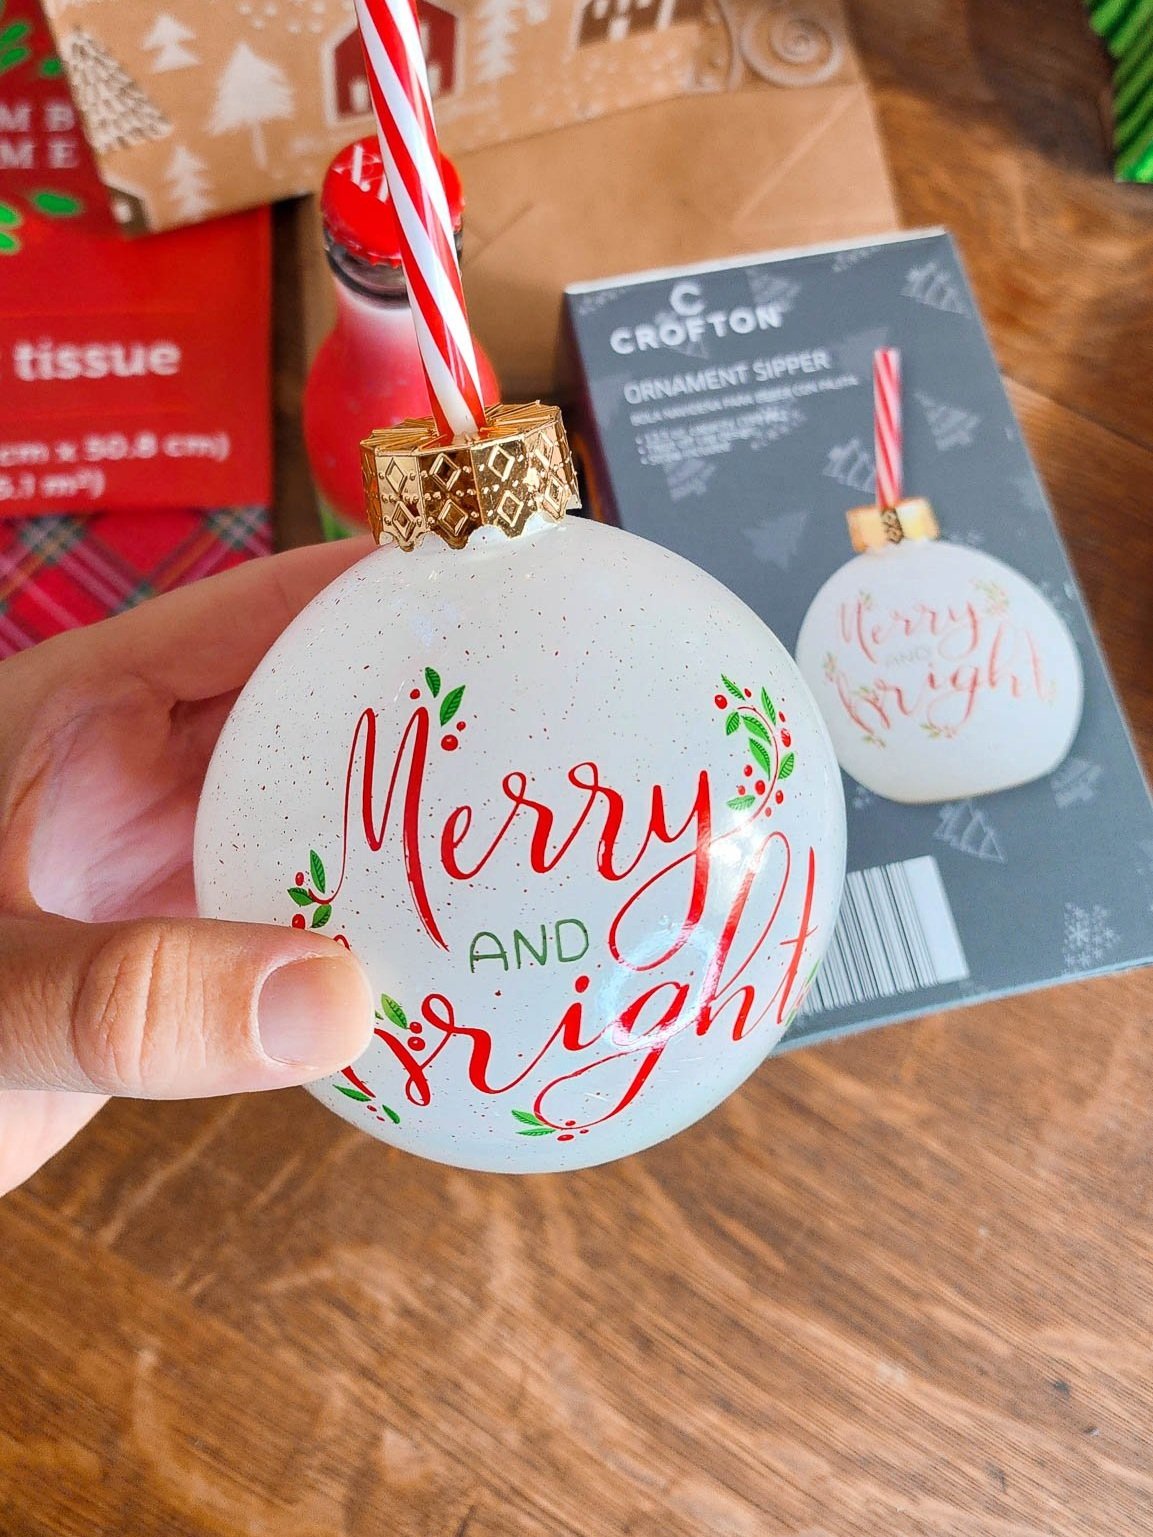 Christmas Gift Idea - Secret Santa Gifts For Colleagues - Christmas Gift  Hamper - Gift For Christmas - VivaGifts